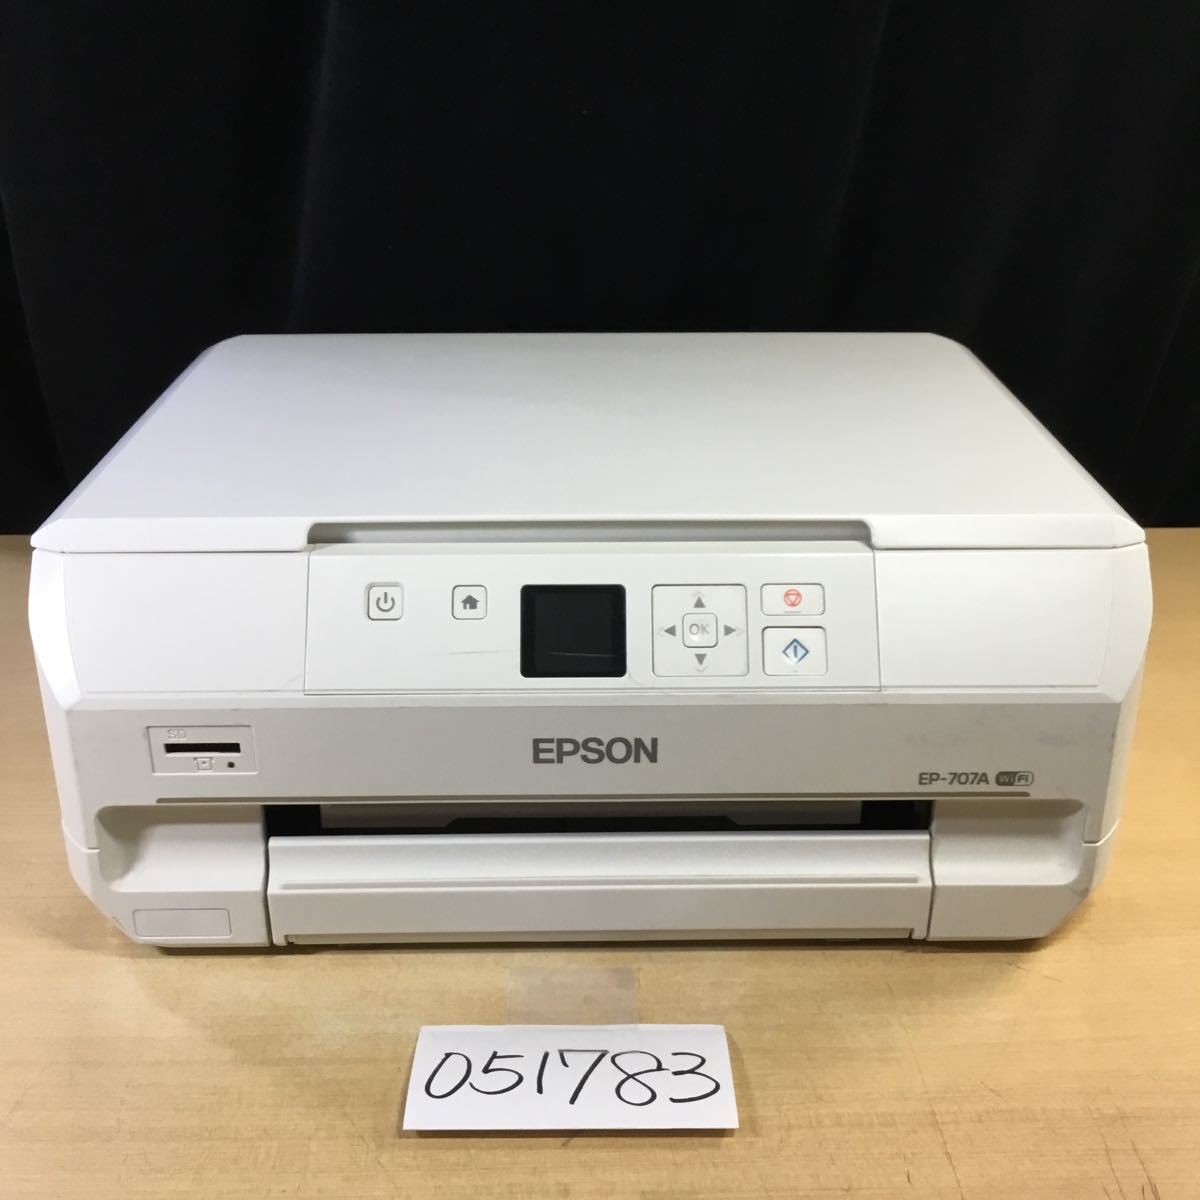 051783) EPSON EP-707A インクジェットプリンタ 複合機 本体のみ